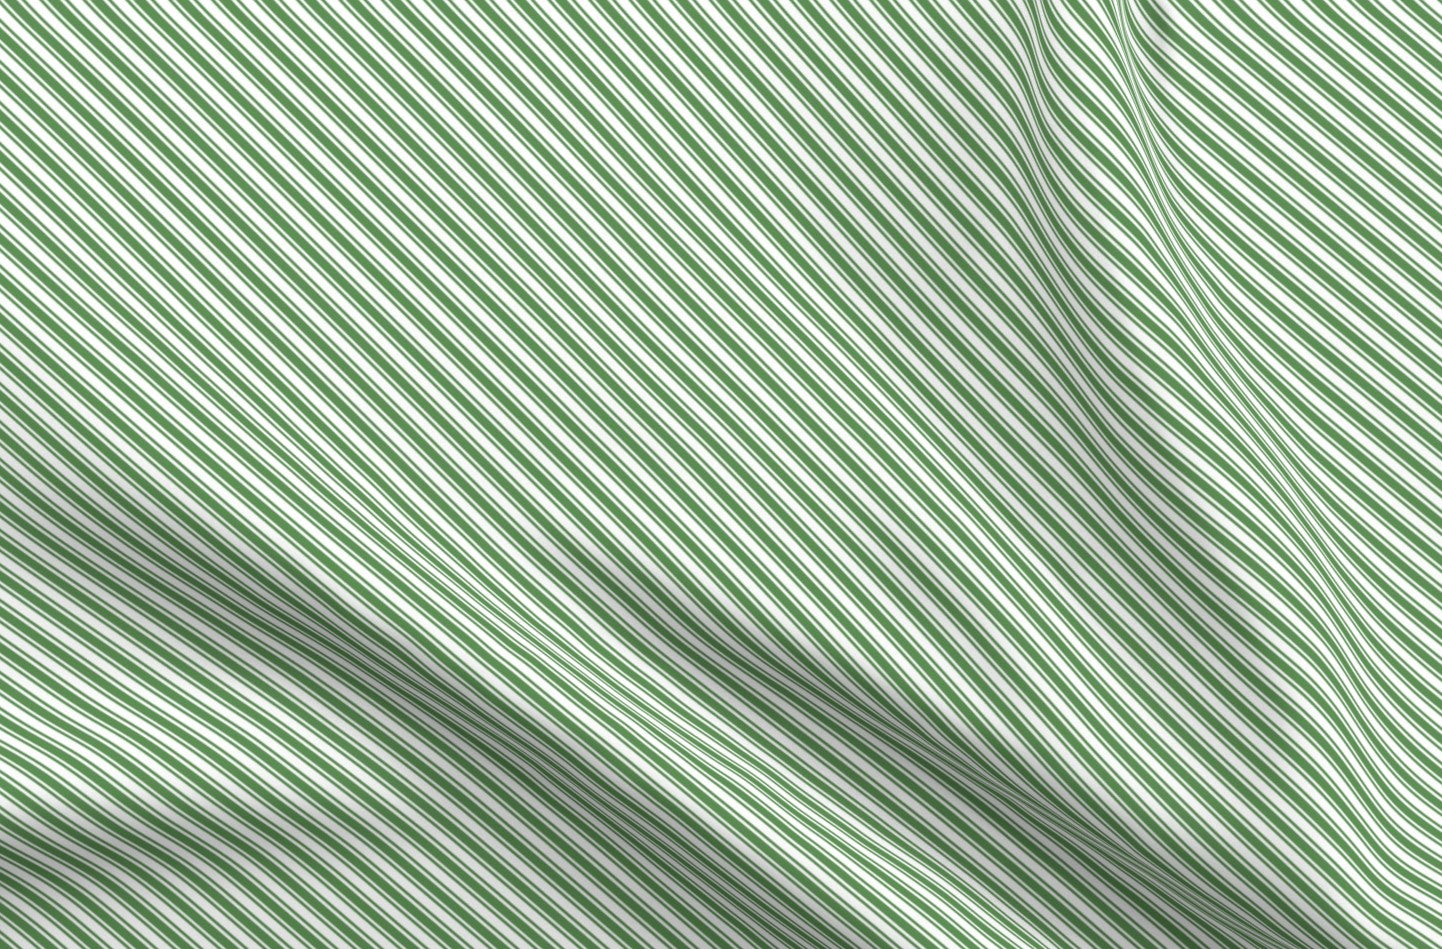 Green & White Candy Cane Stripe Printed Fabric by Studio Ten Design